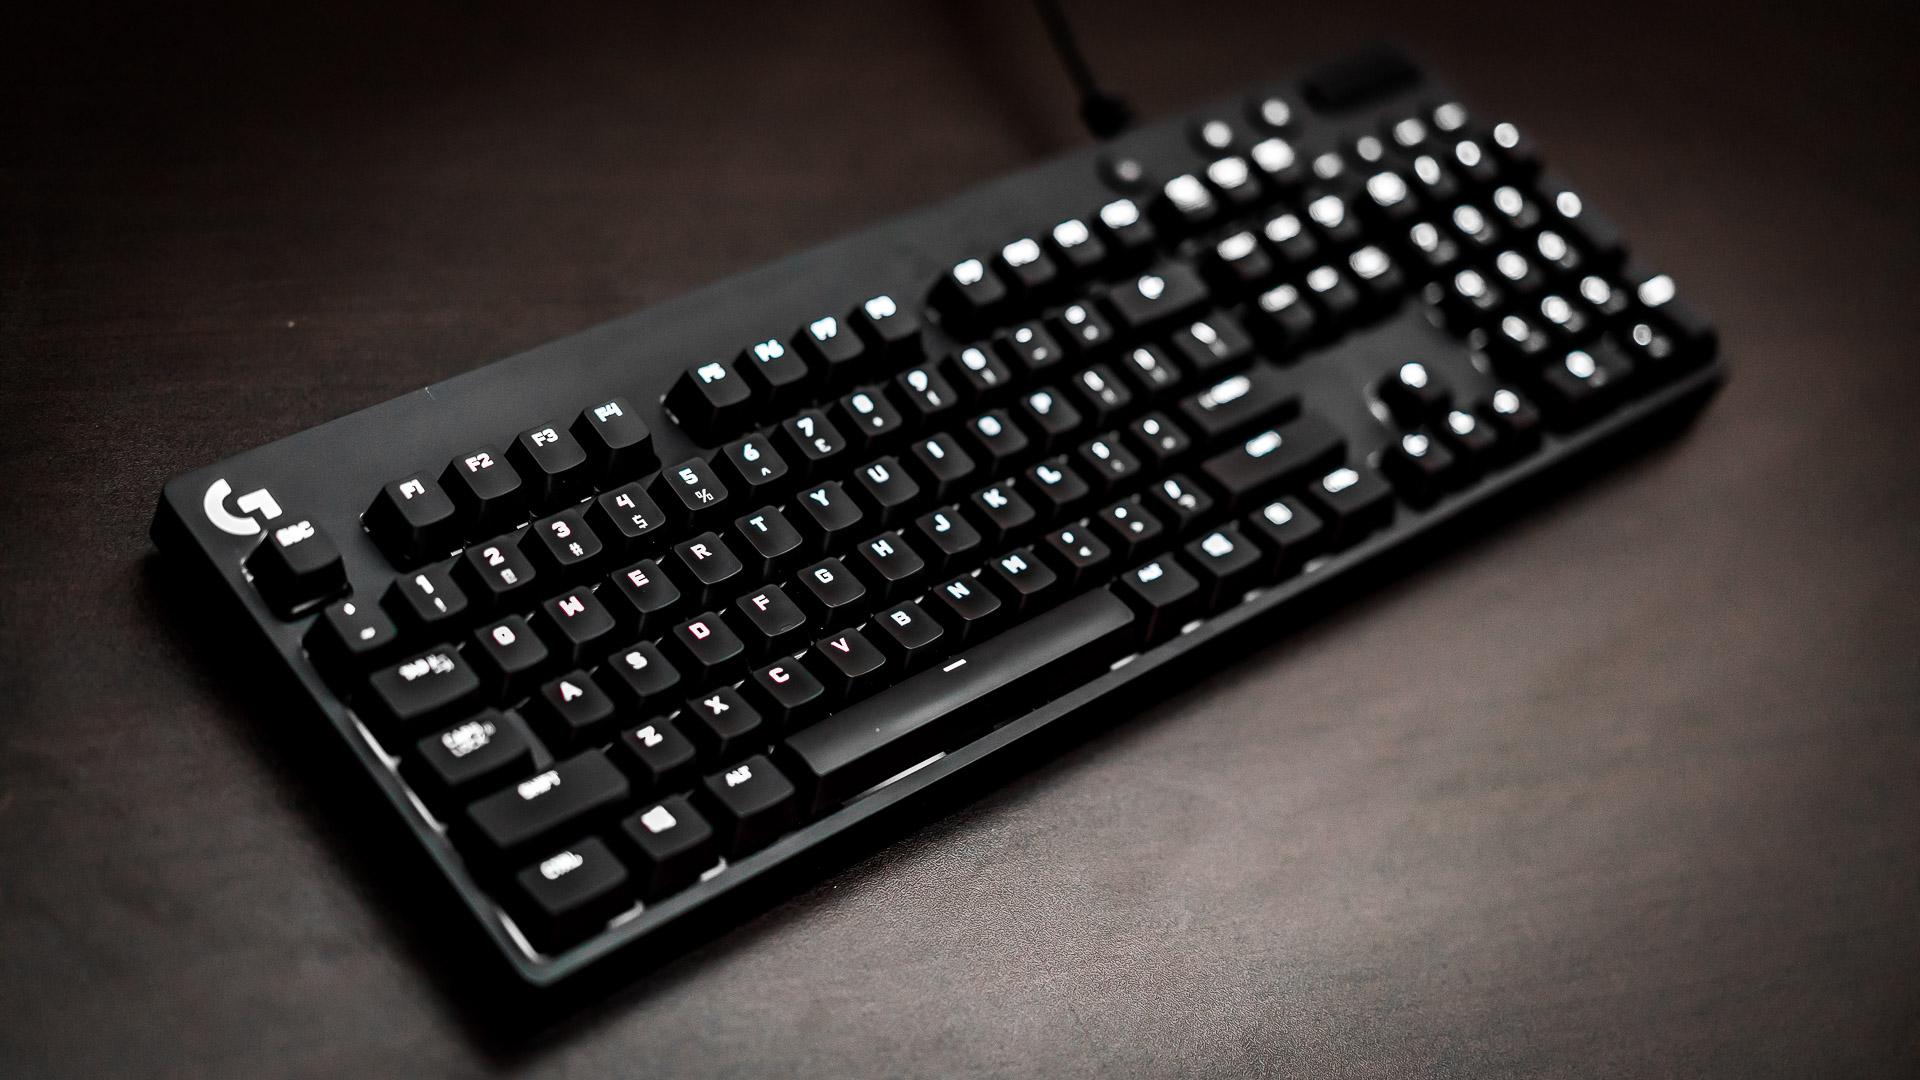 Logitech G610 Orion Brown Backlit Mechanical Gaming Keyboard